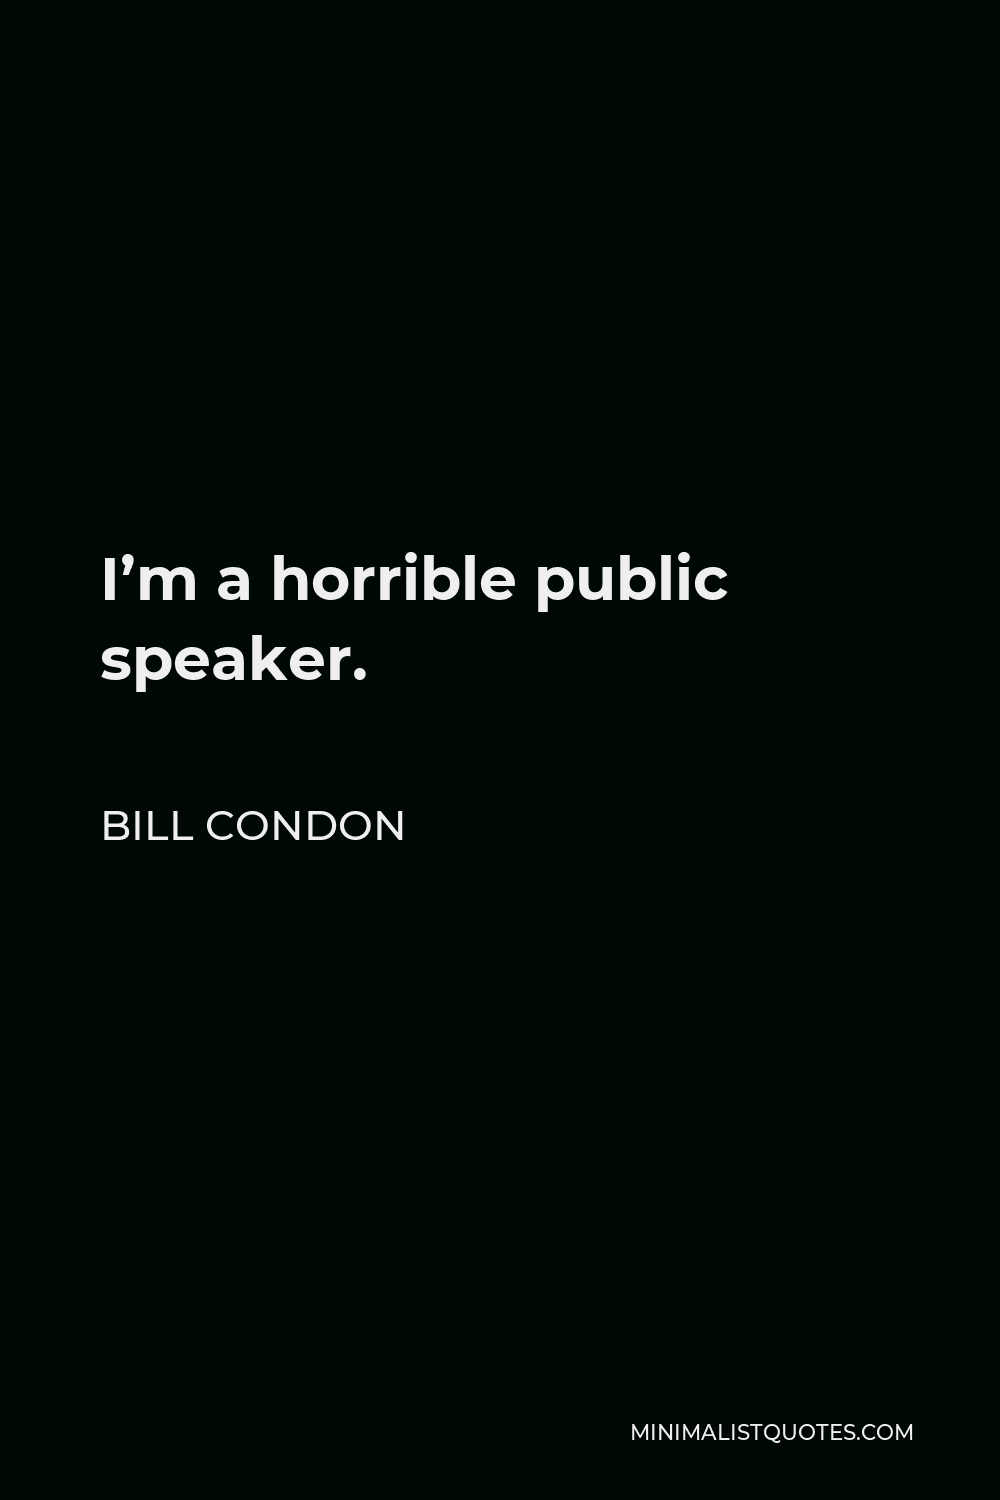 Bill Condon Quote - I’m a horrible public speaker.